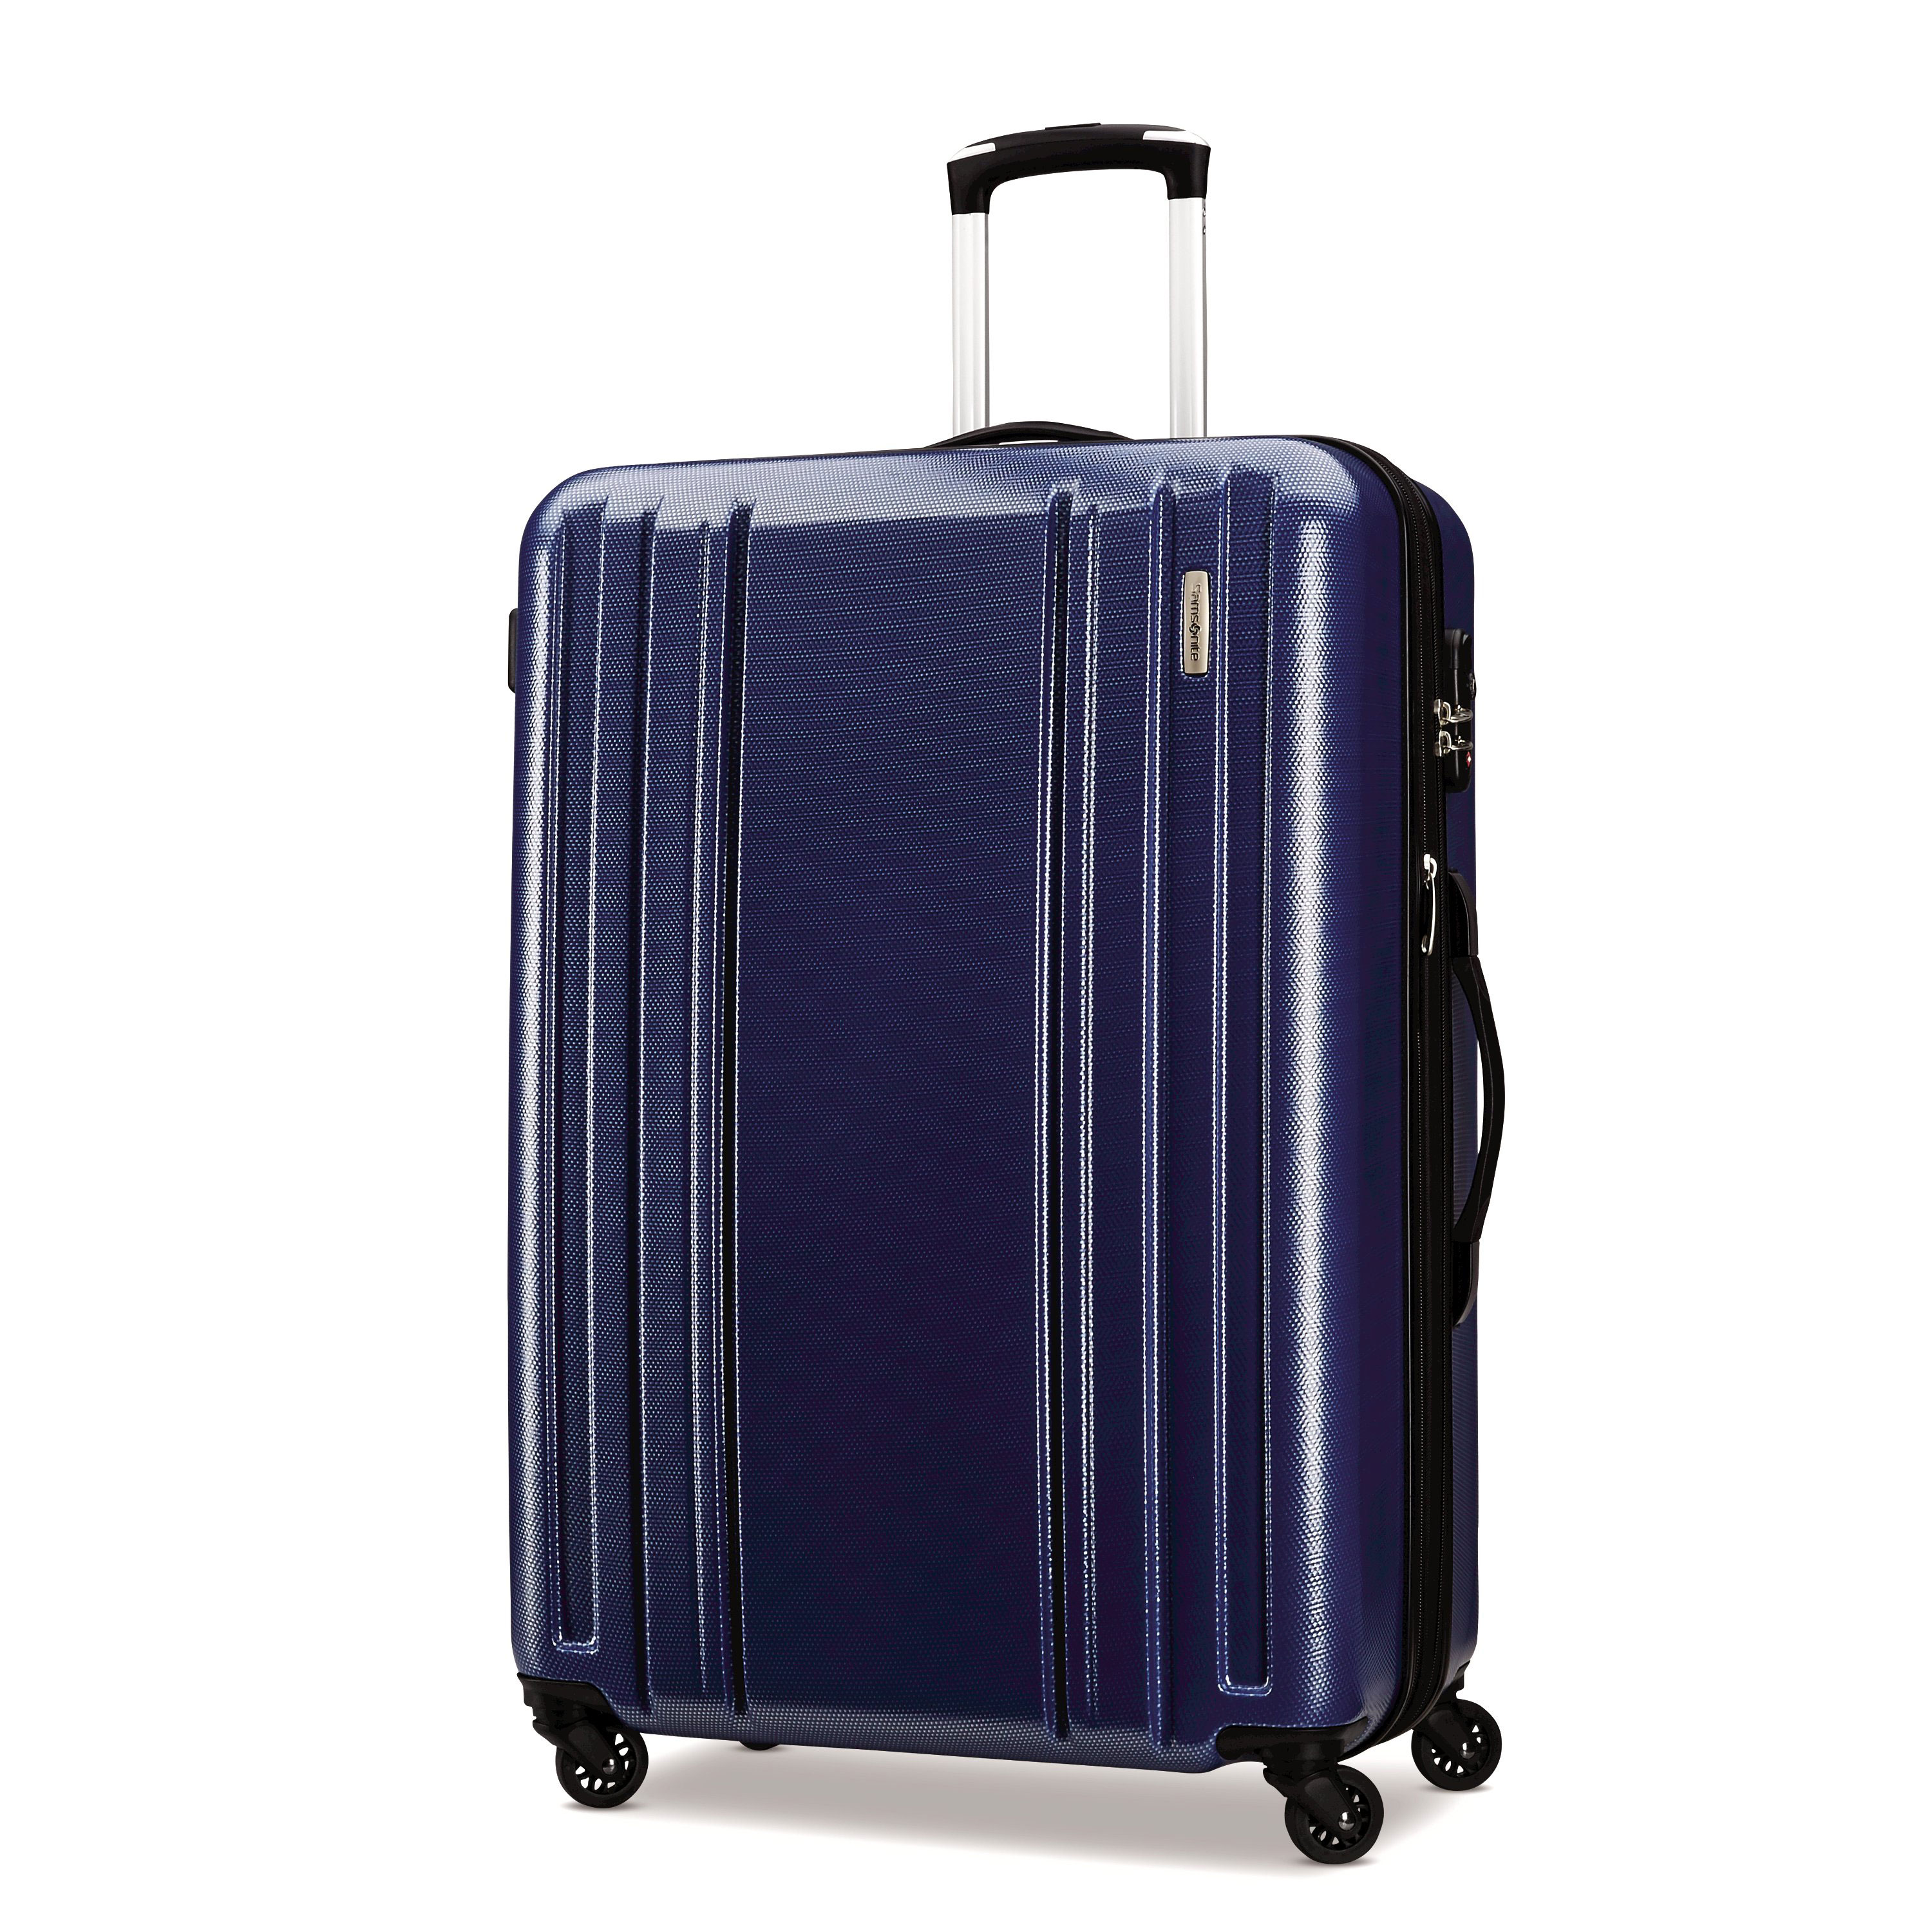 Samsonite Carbon 2 Large Spinner - Luggage